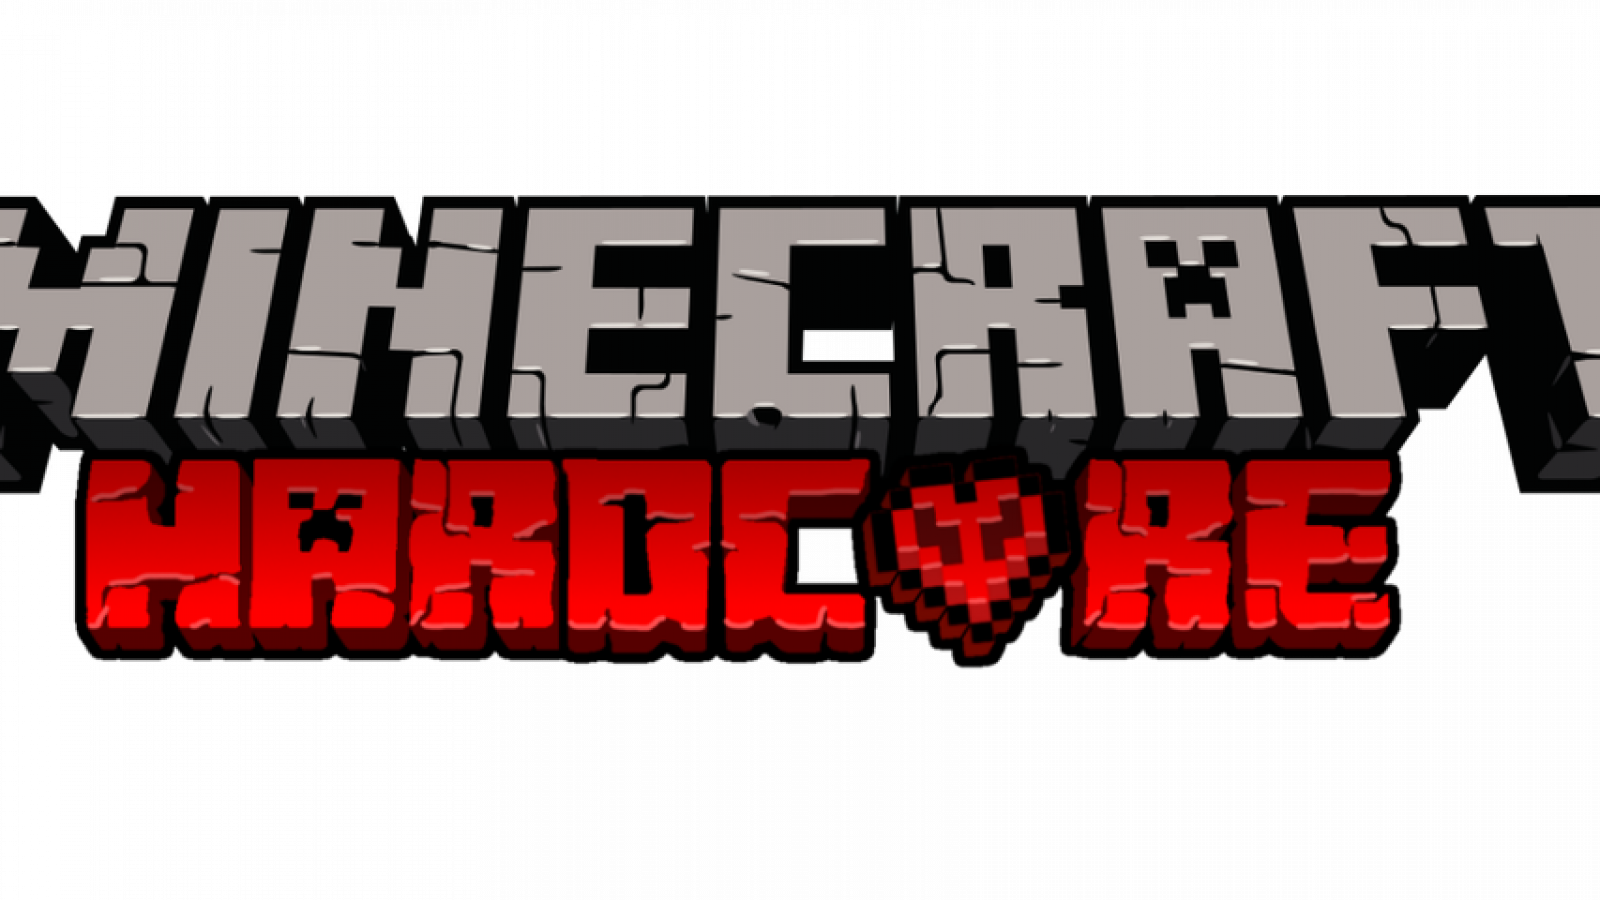 Minecraft Hardcore World Record